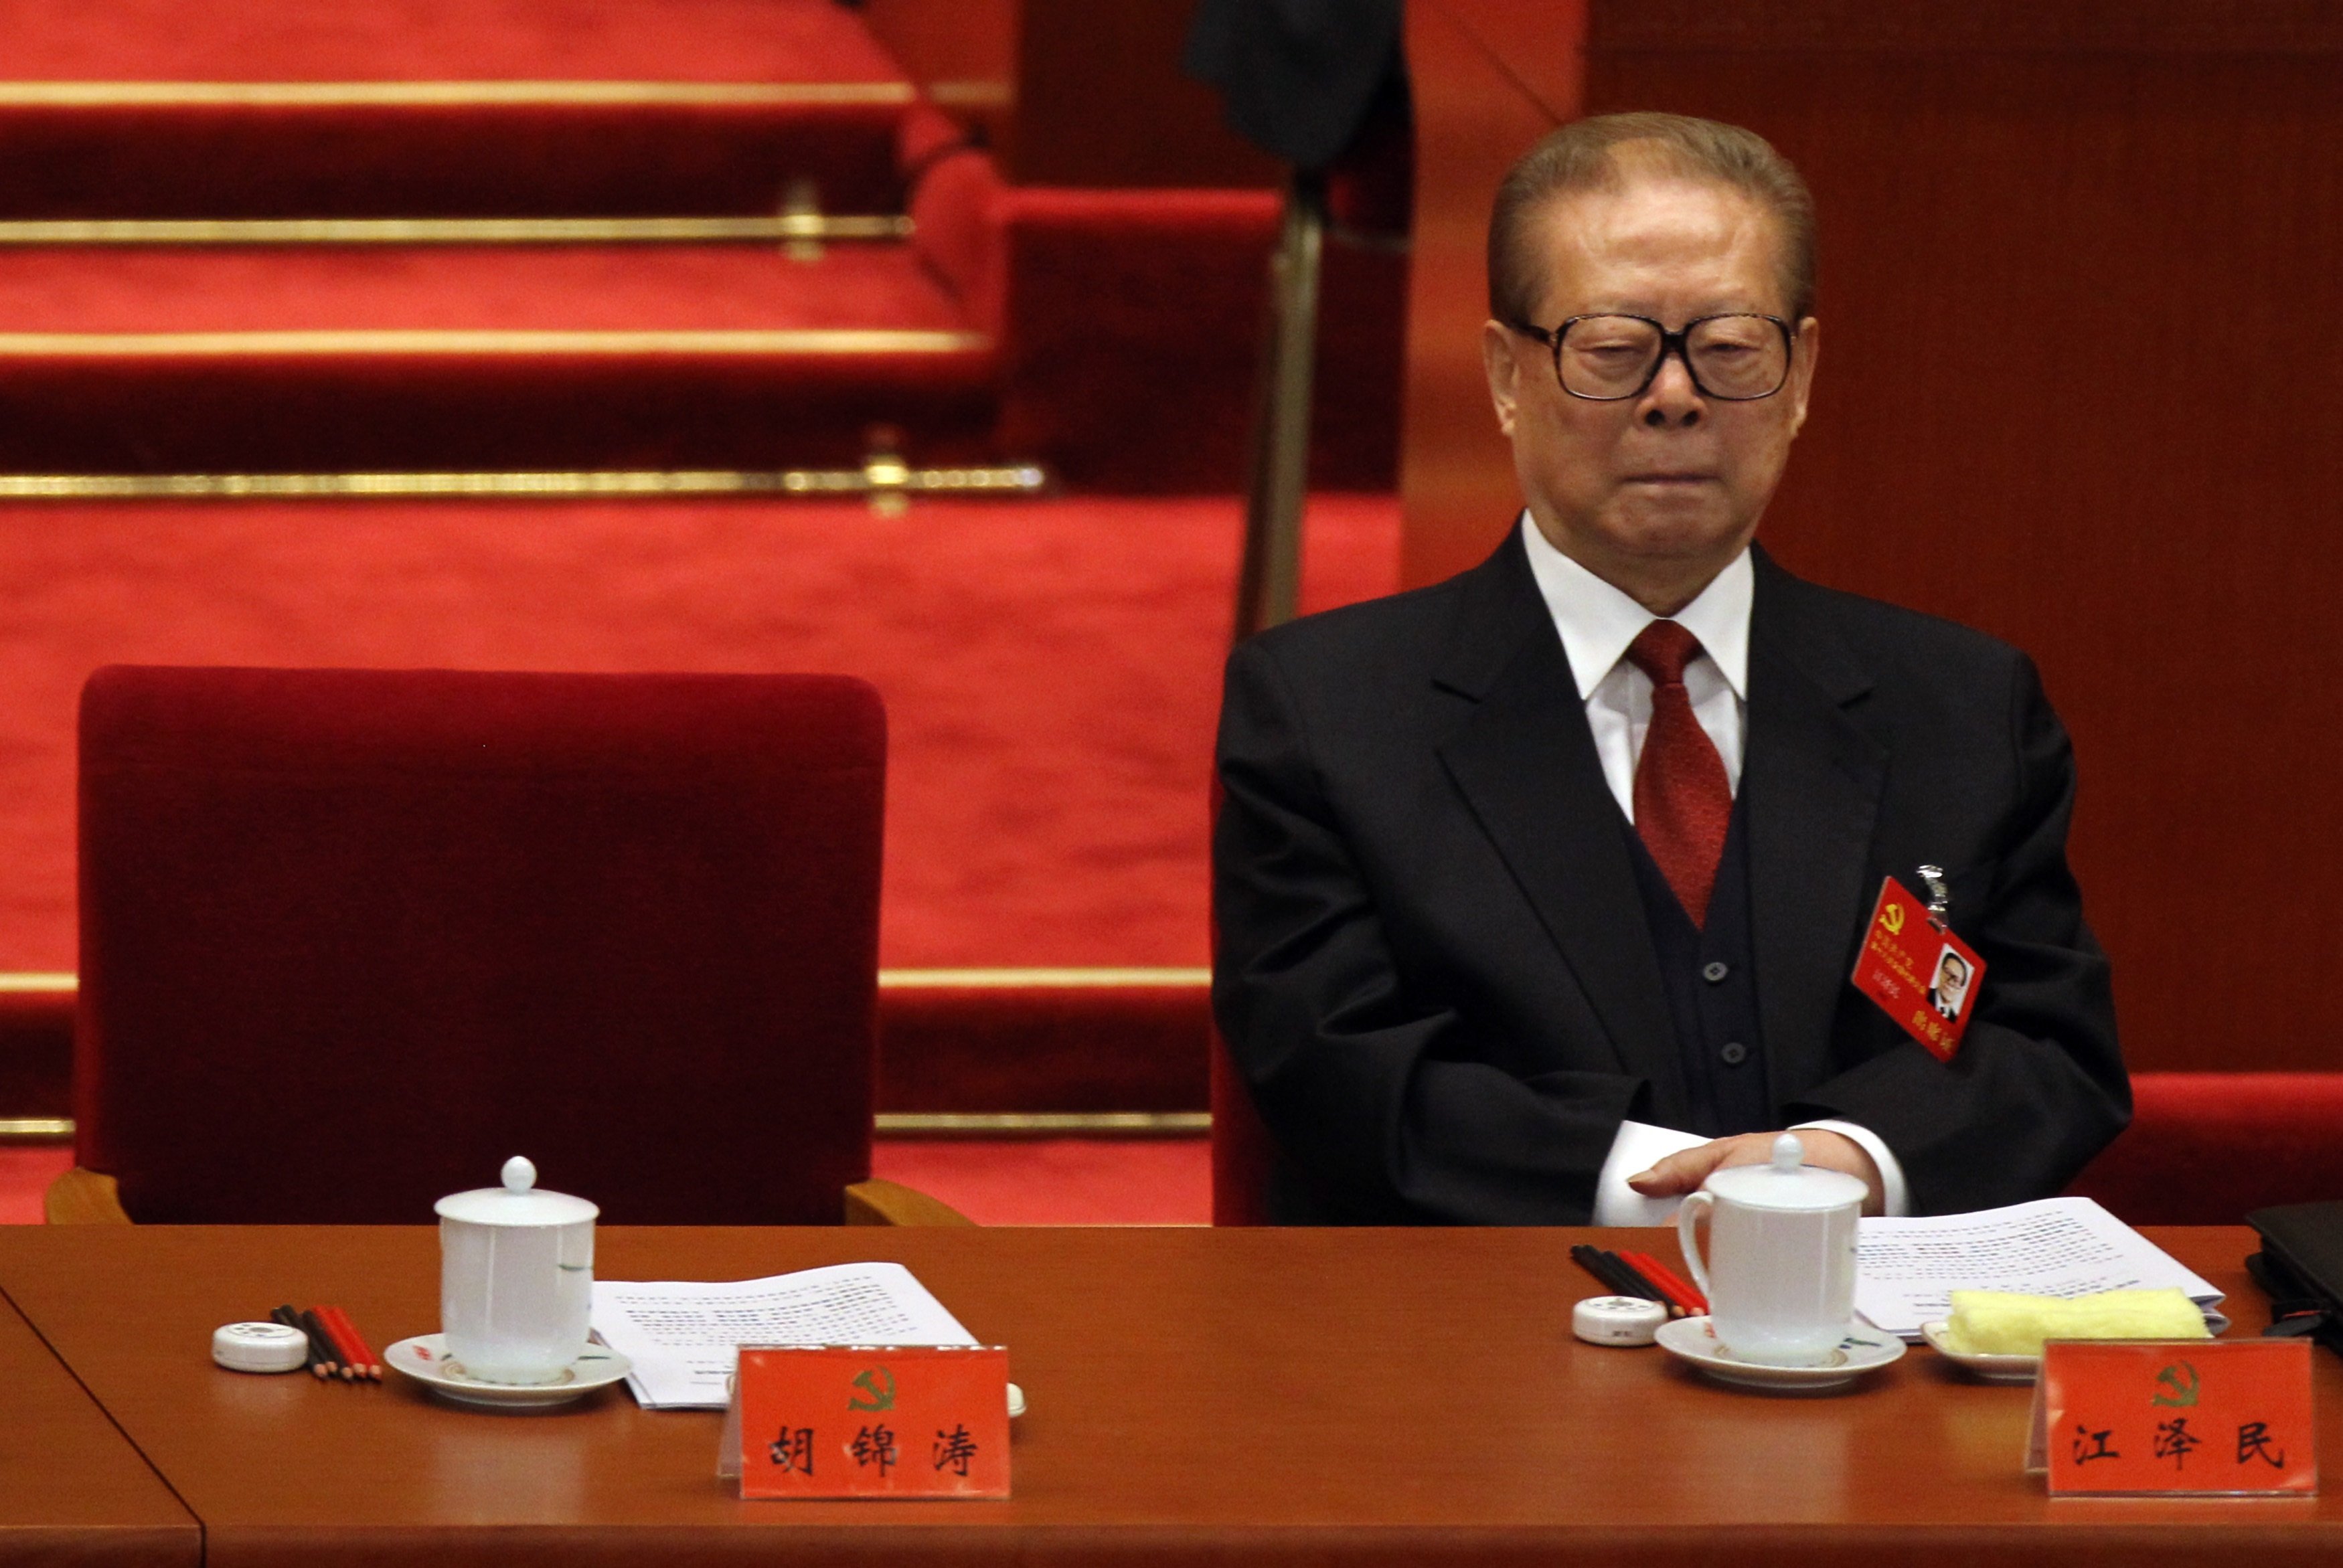 Mor l'expresident xinès Jiang Zemin als 96 anys